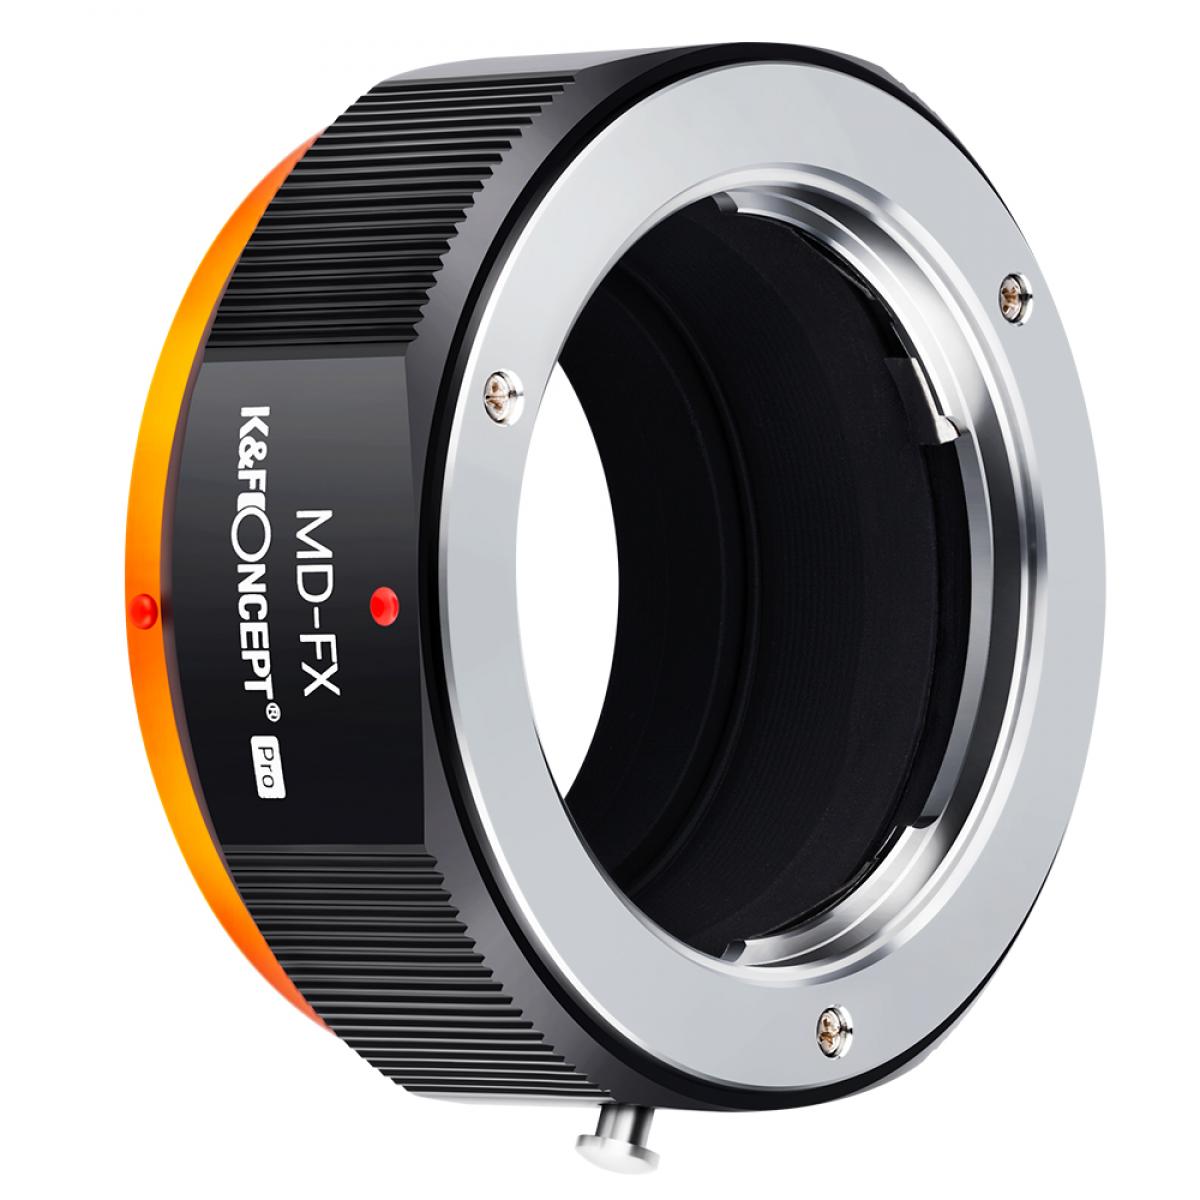 Minolta, Seagull, Pearl River series MD lenses to Fuji FX mount body MD-FX PRO K&F Concept M15115 Lens Adapter